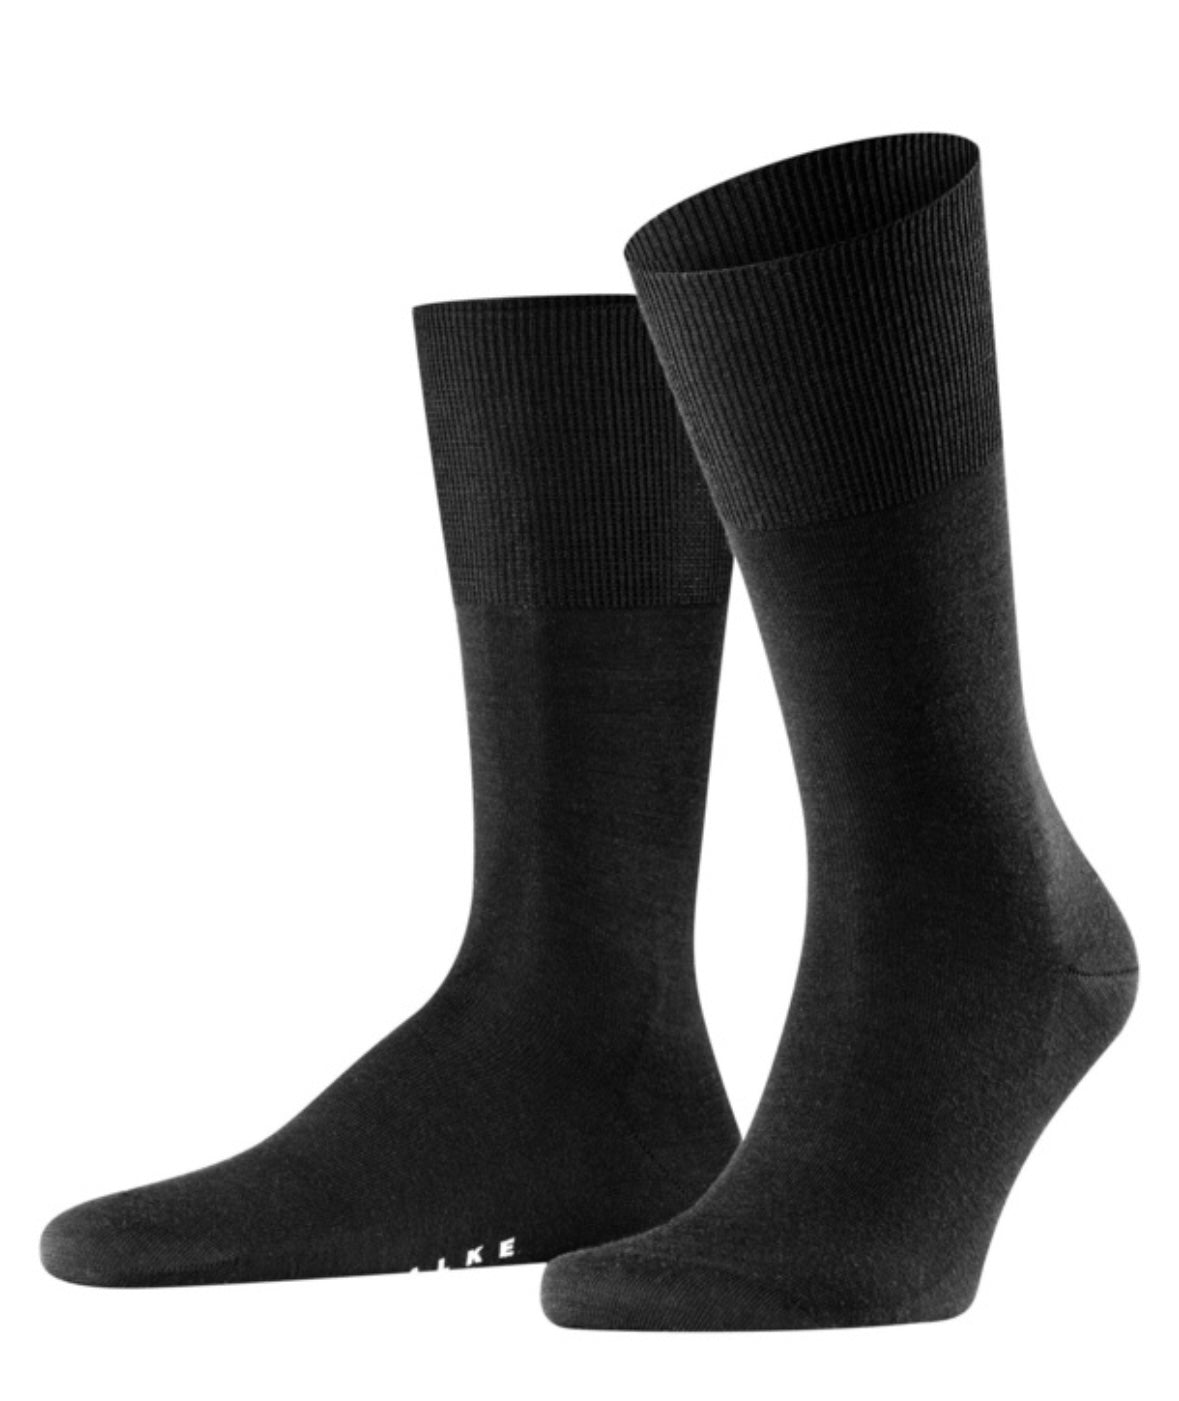 Falke Airport socks - Black